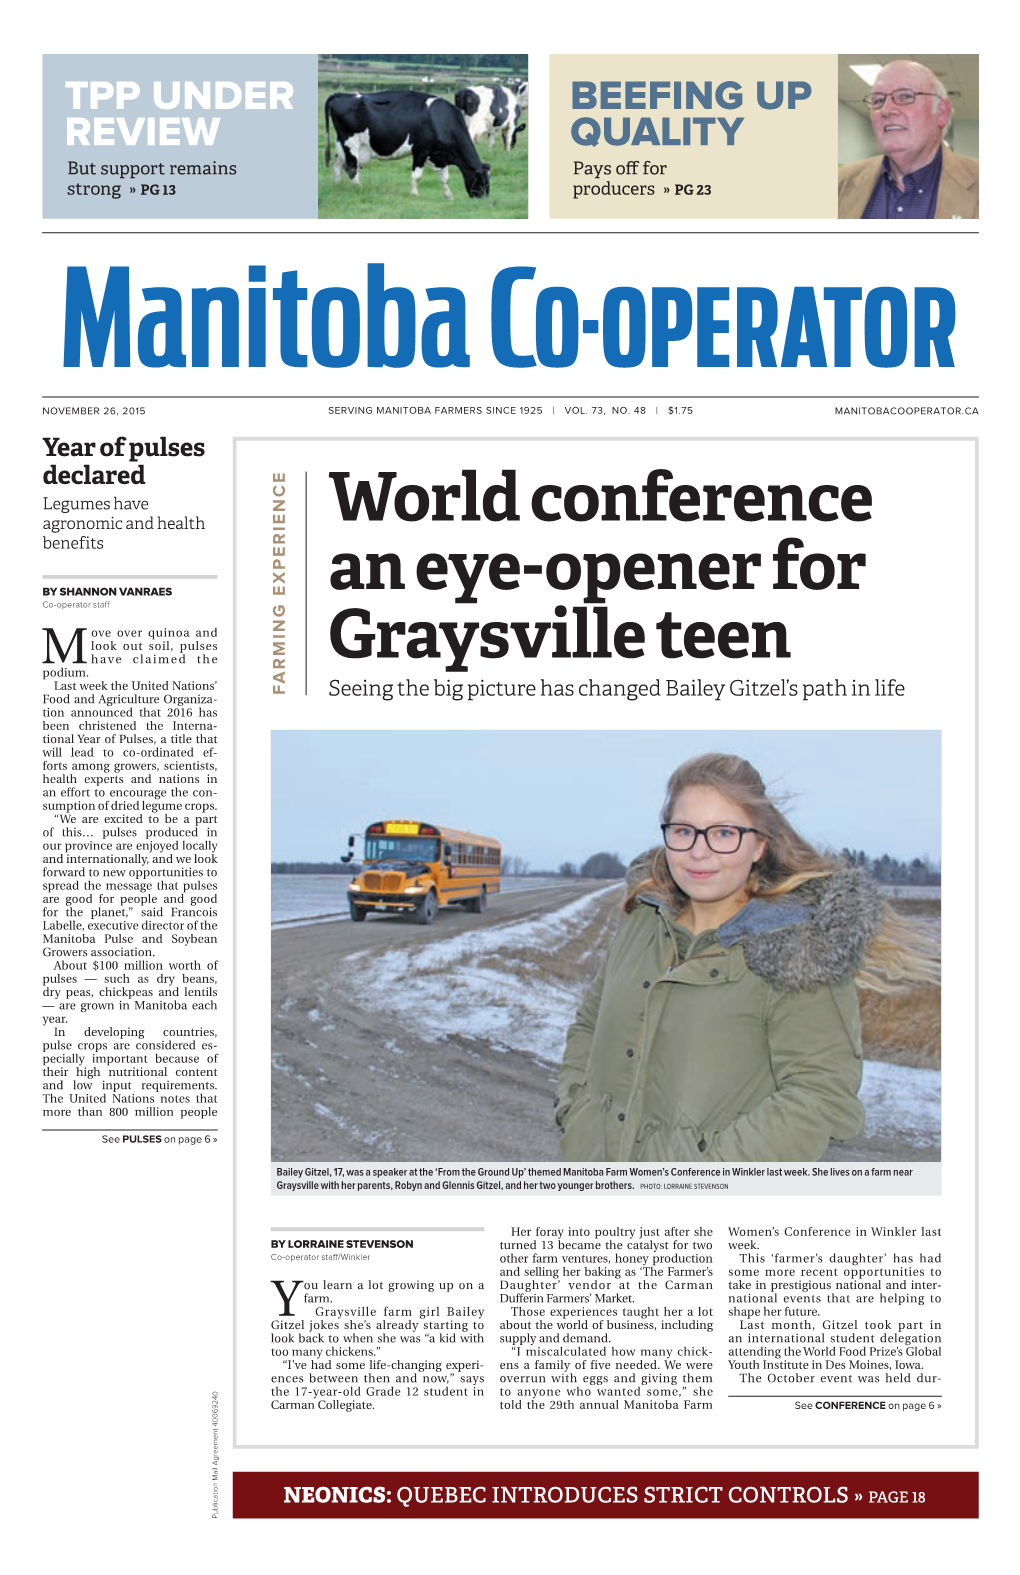 World Conference an Eye-Opener for Graysville Teen